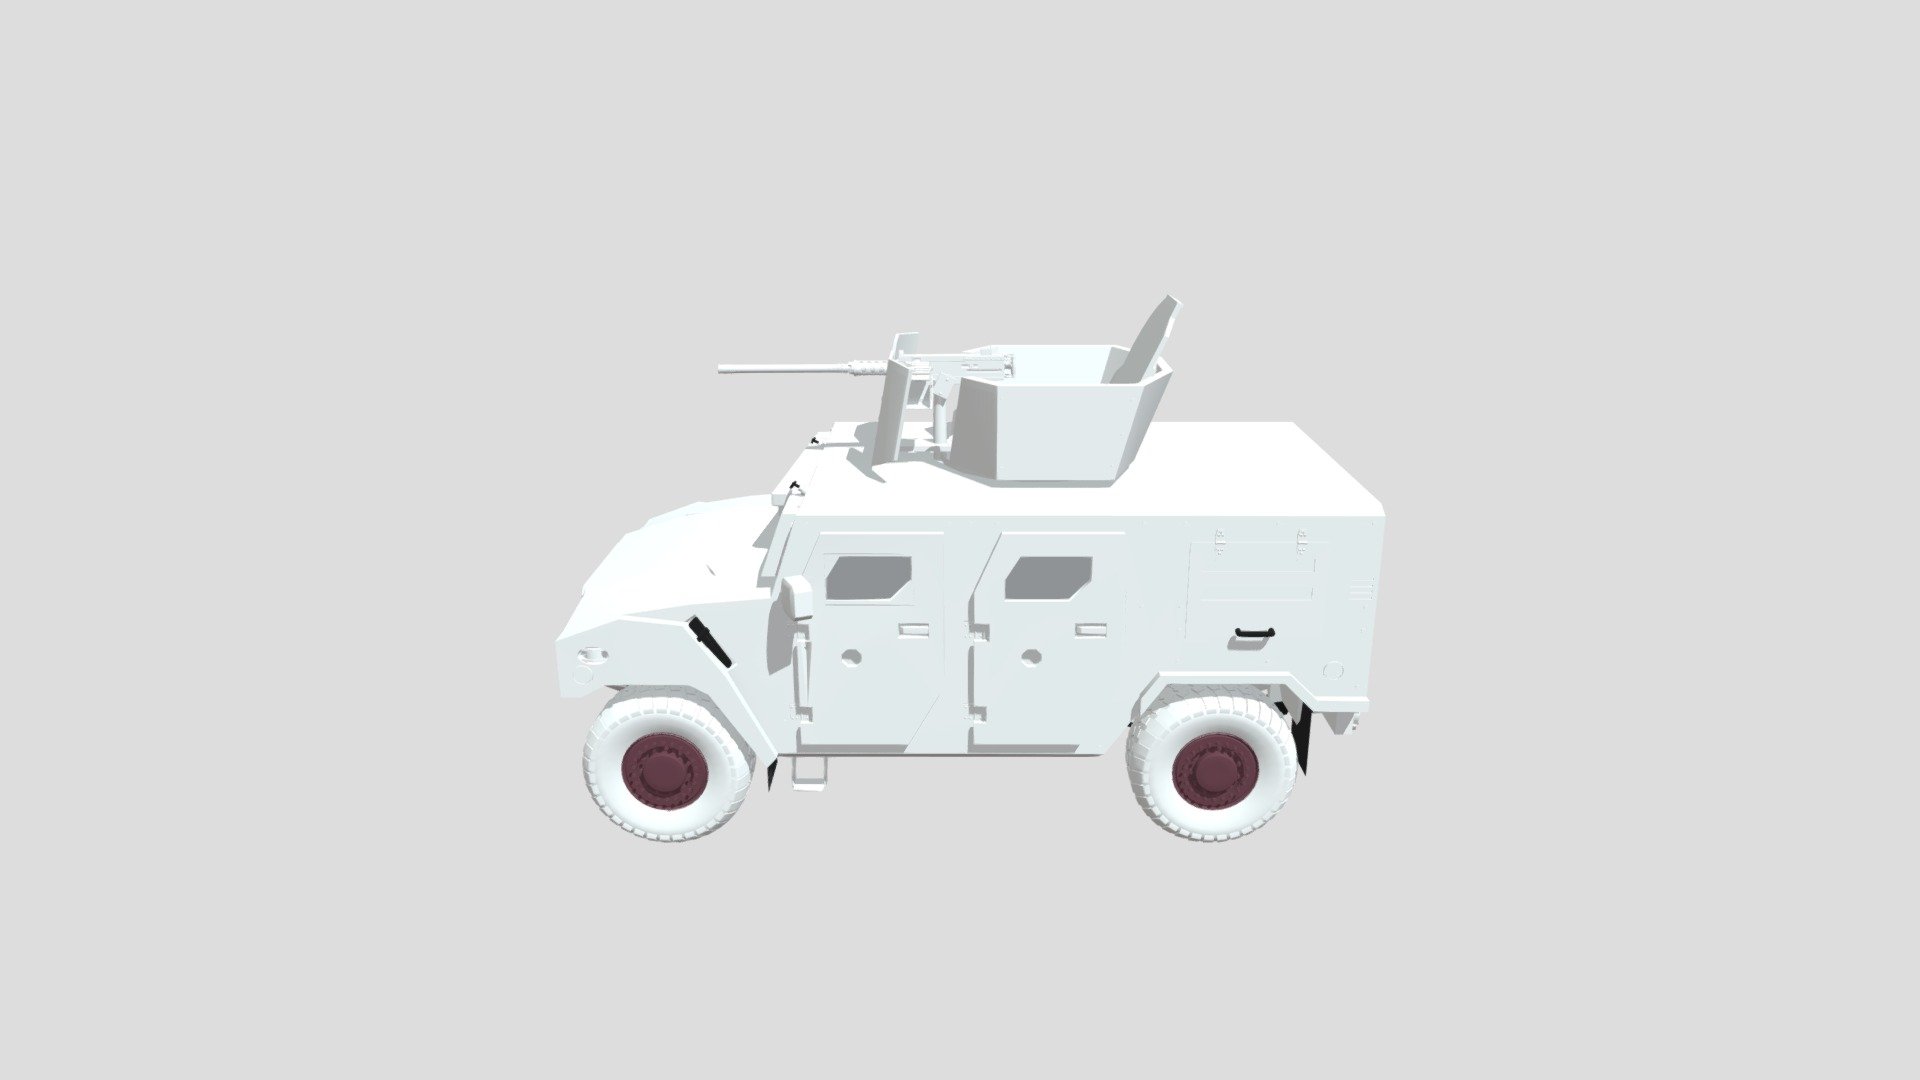 Light Tactical Vehicle, Light Utility Vehicle, Light Activity Vehicle, Light All-Terrain Vehicle

south korea Light Tactical Vehicle k-151

K151, K-151 is south korea humvee - K151 detailup - 3D model by hohorang 3d model